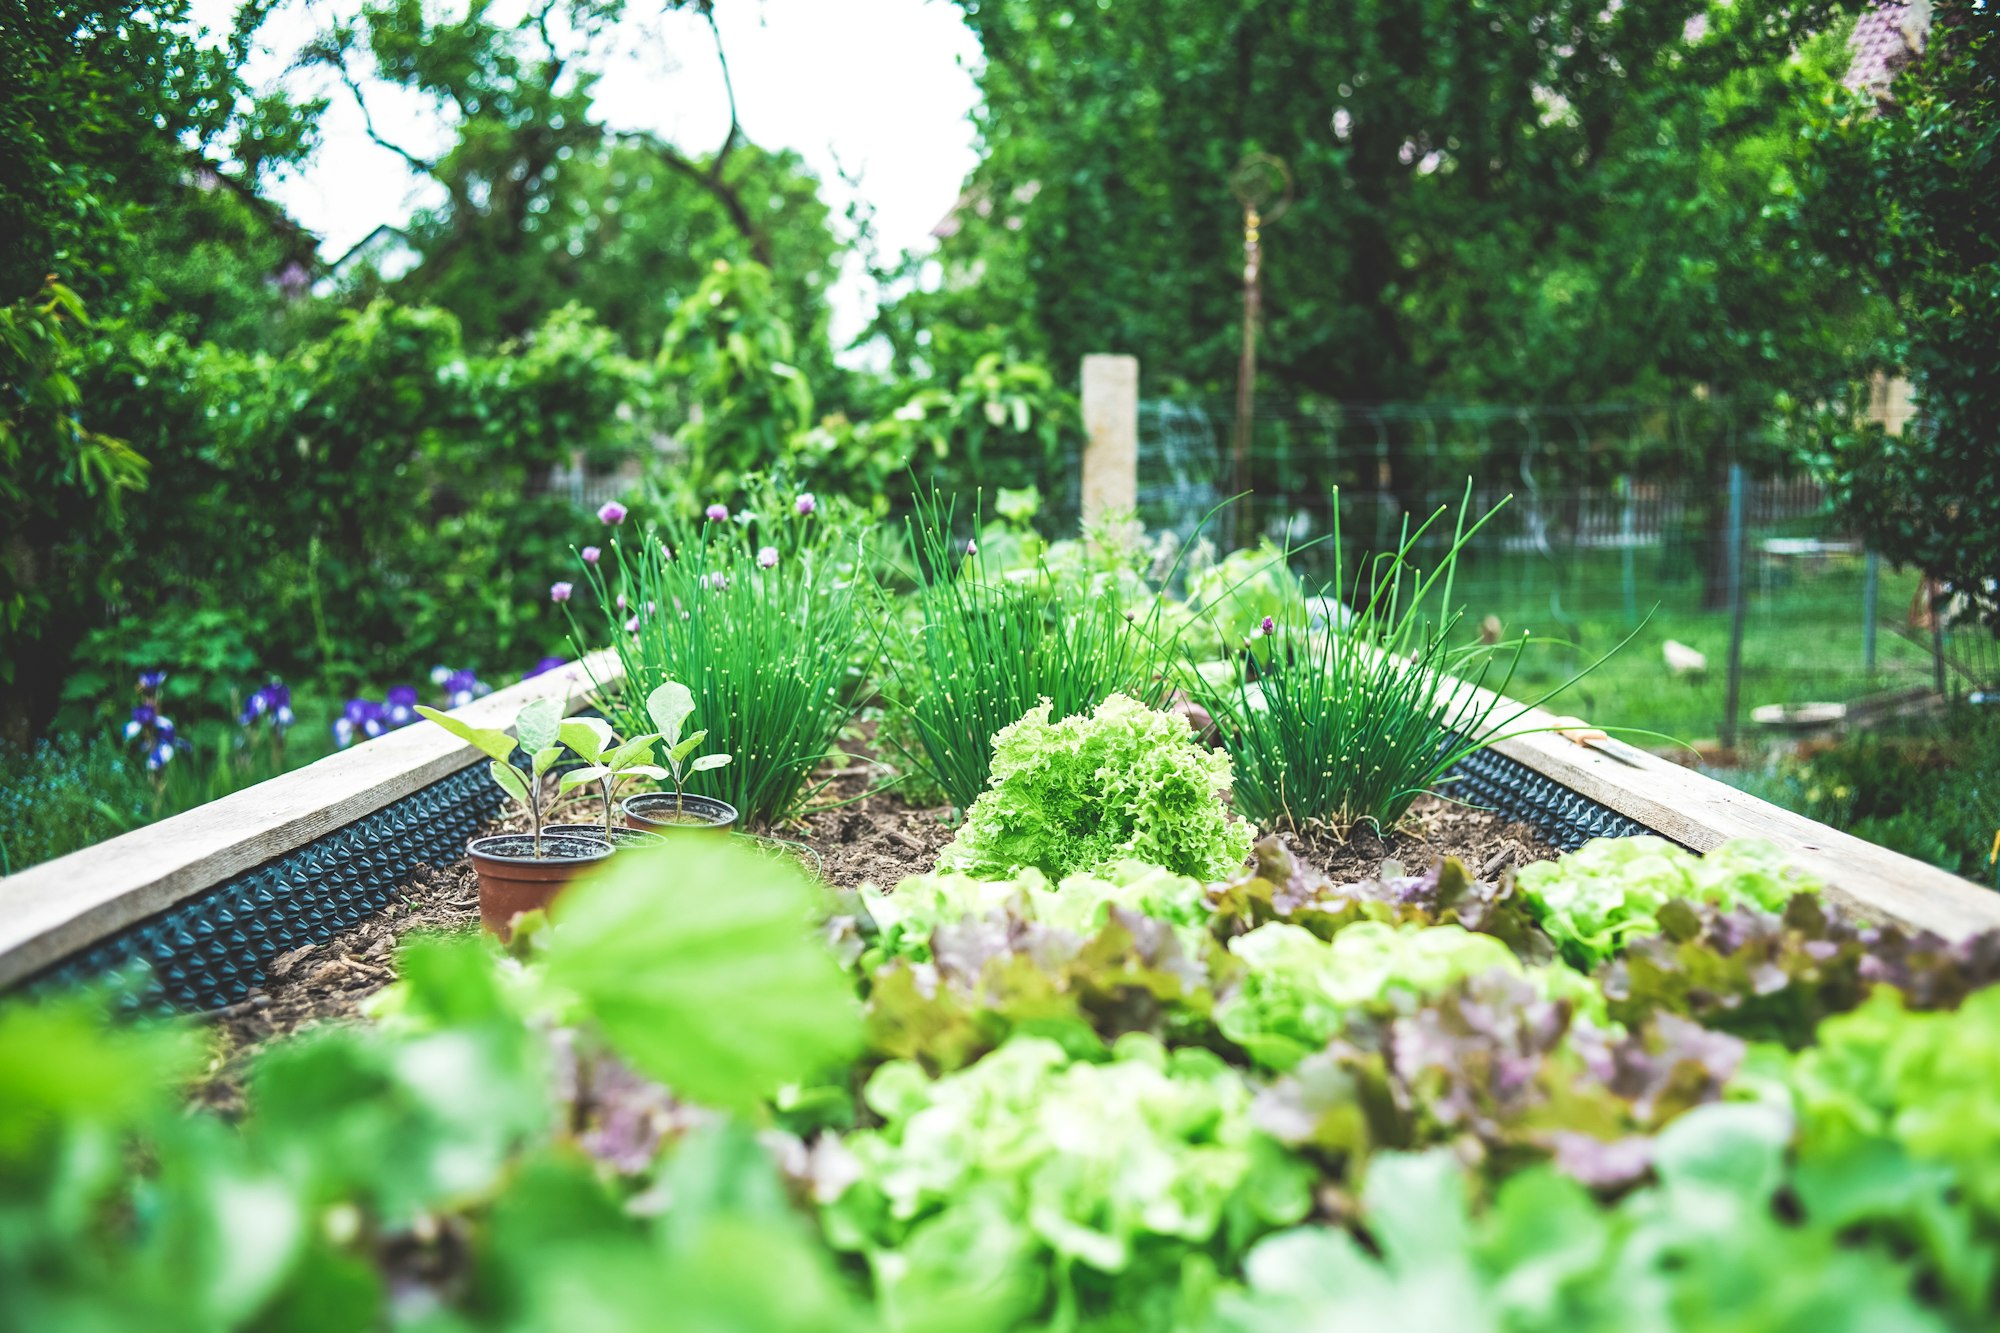 Urban Gardening in raised bed – herbs and salad breeding upbringing. Self supply & self-sufficiency. - wornbee.com